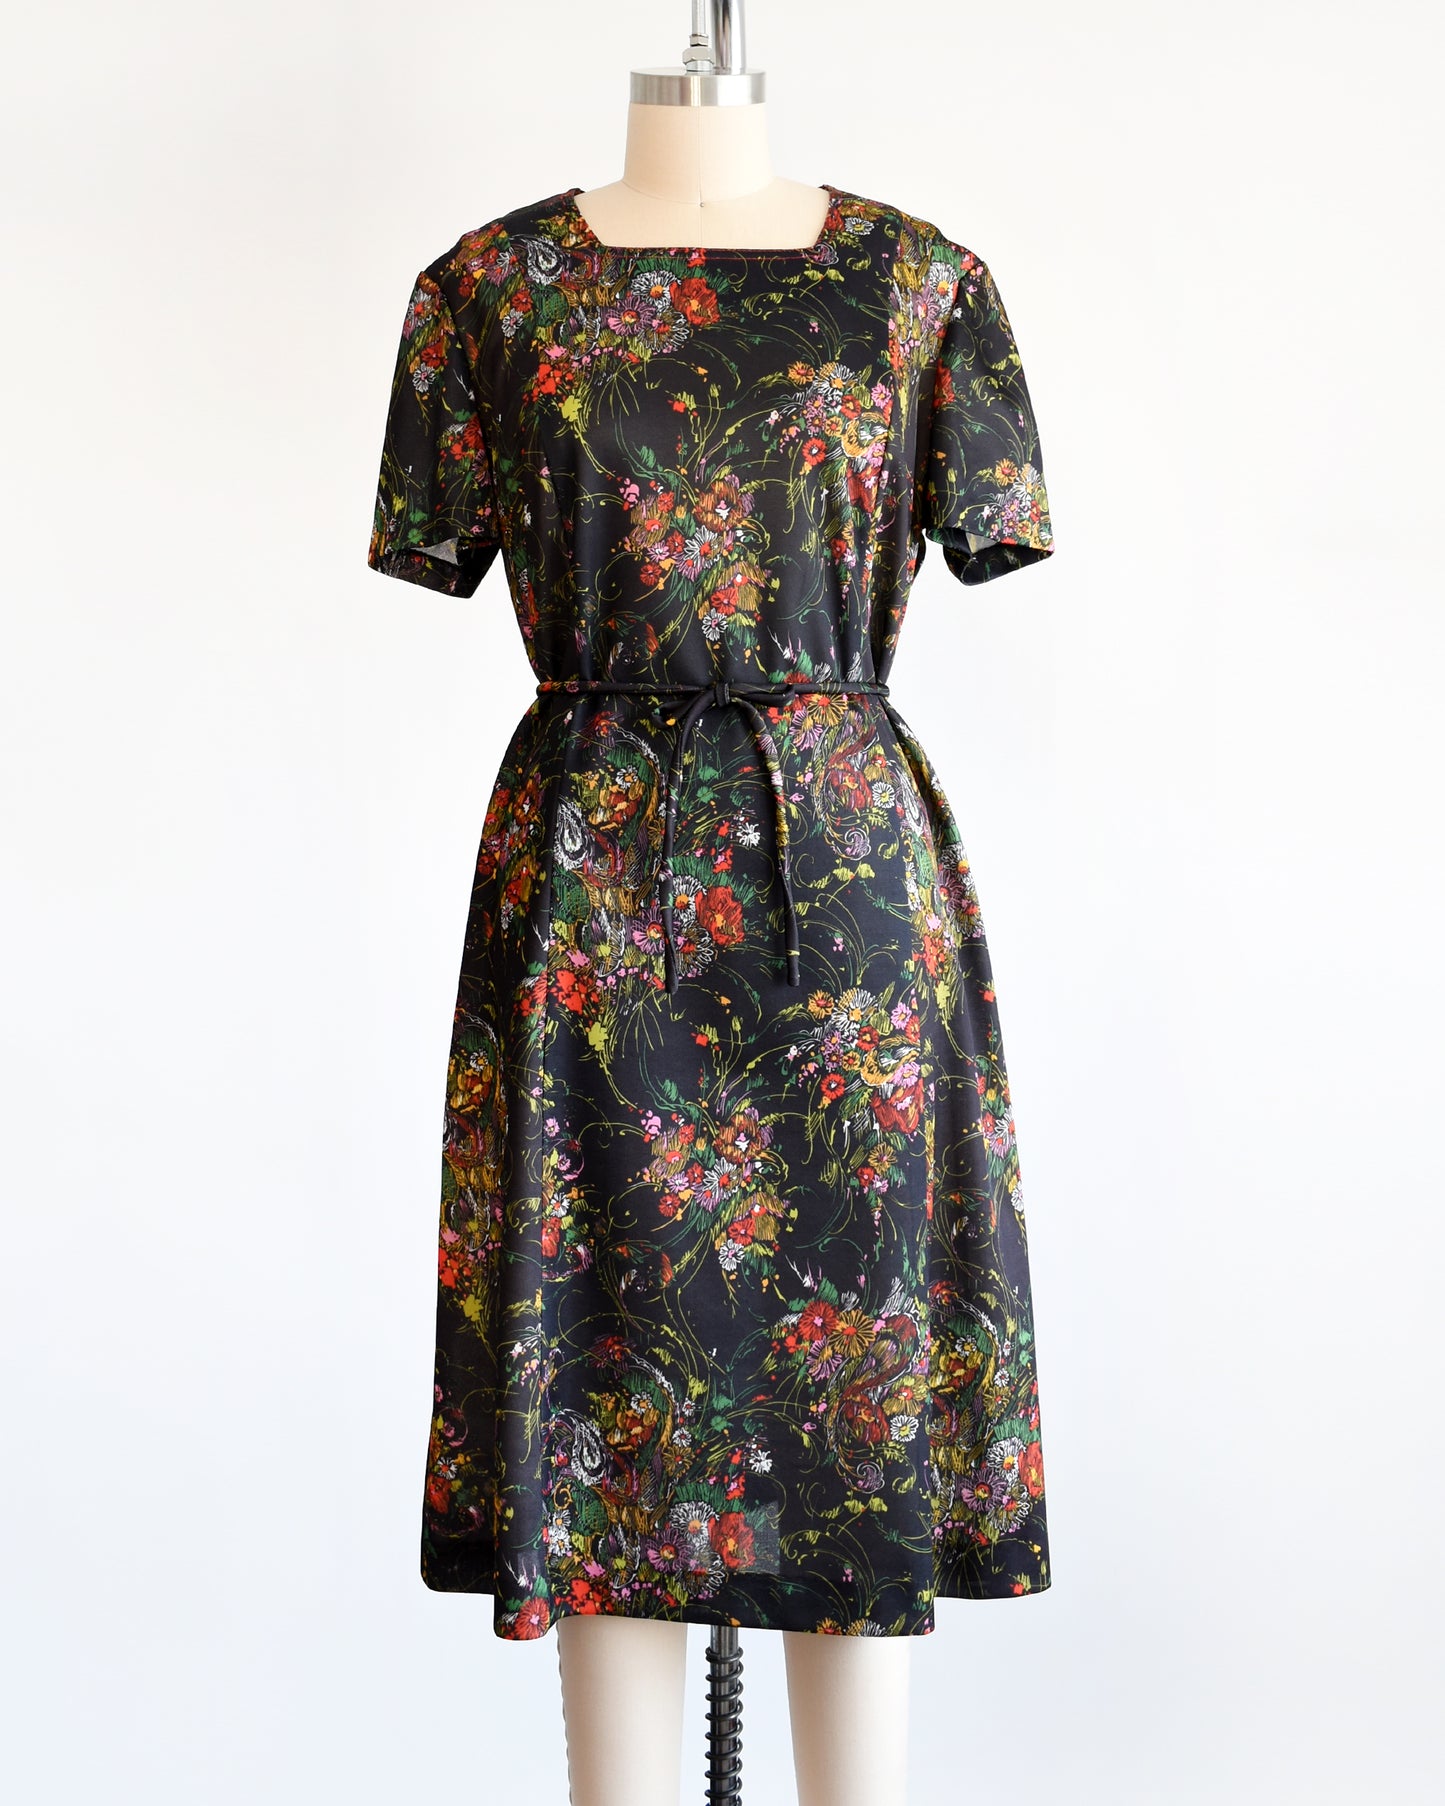 a vintage 1970s black floral dress set that comes with a dress and belt